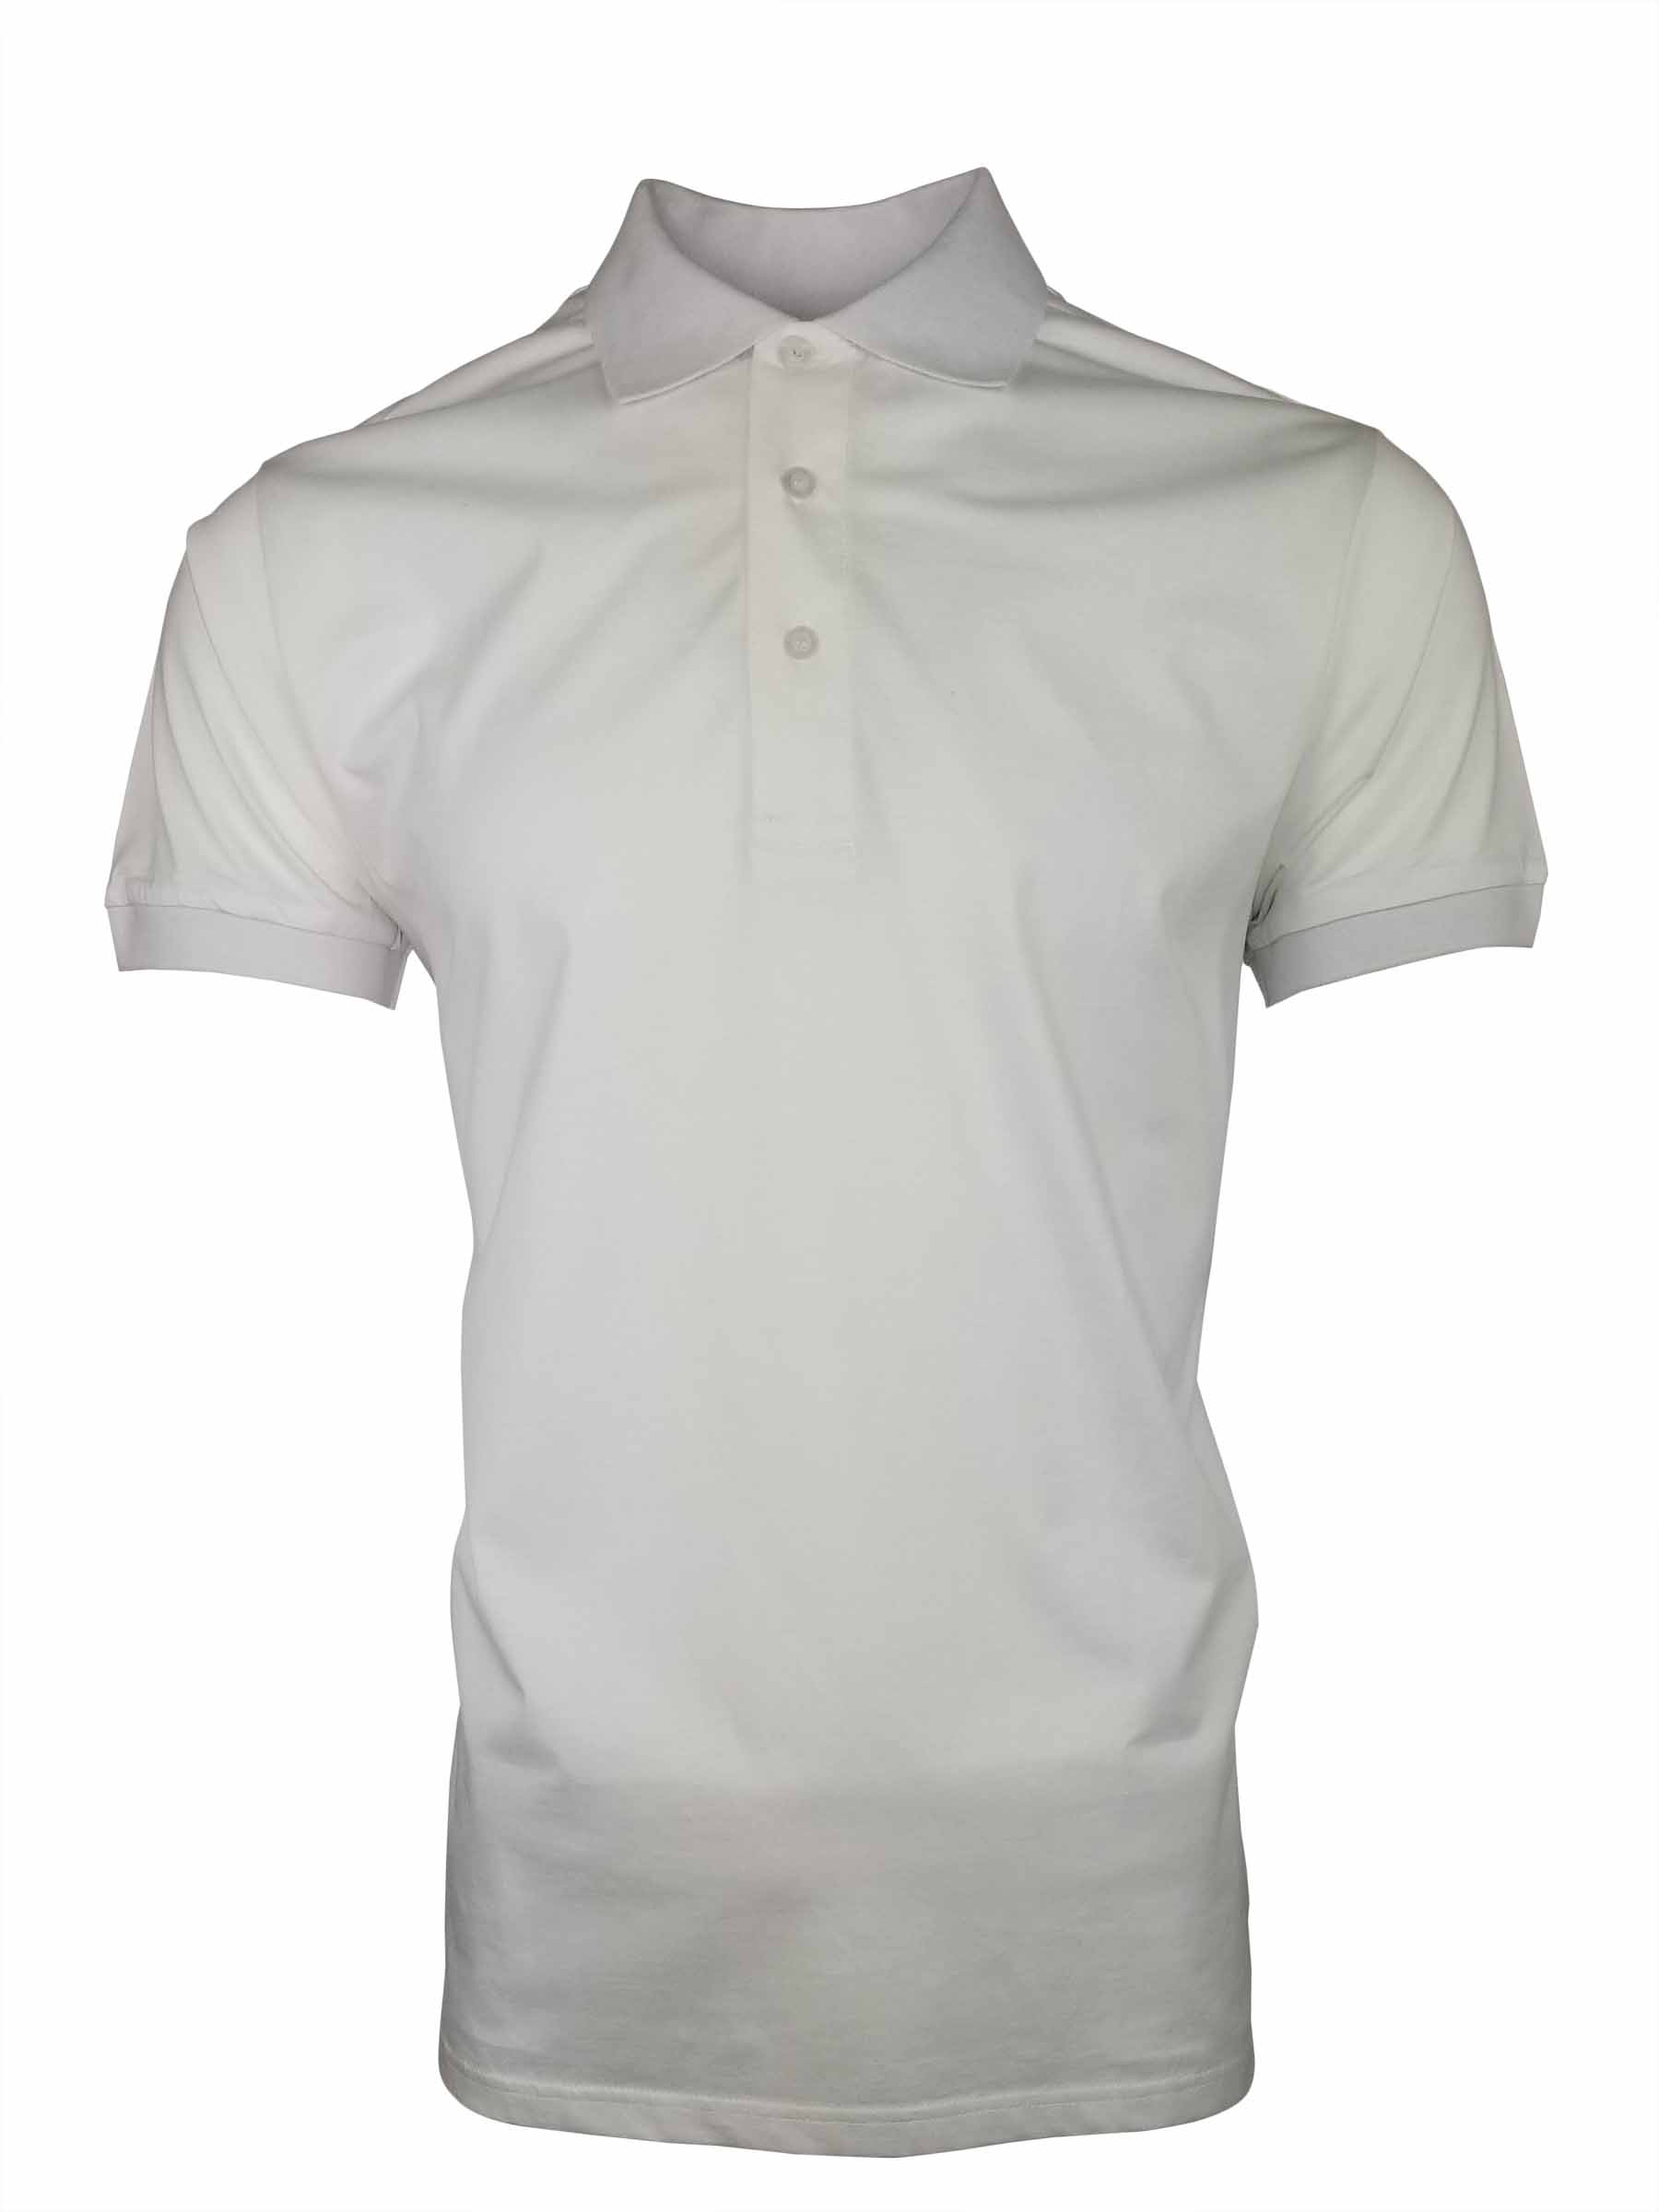 Men's All Occasion Mercerized Polo - White - Uniform Edit